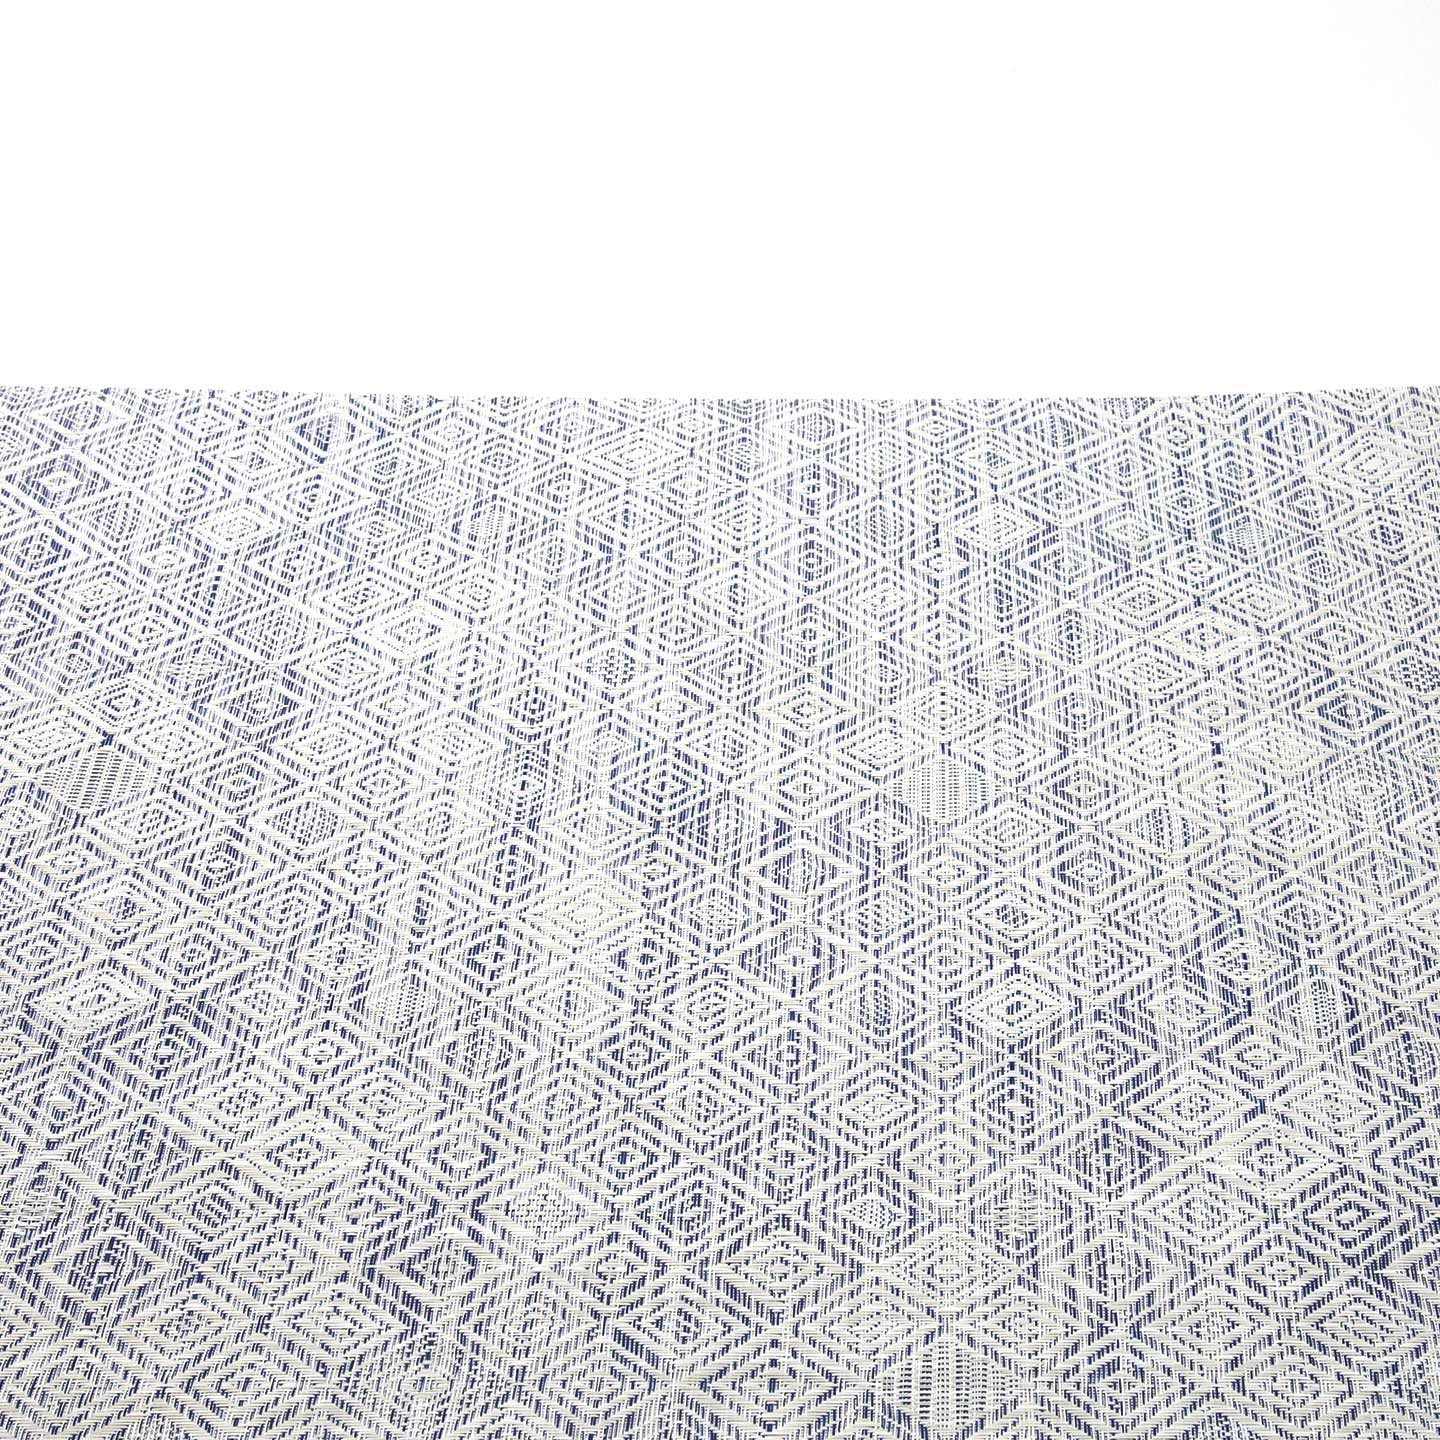 Chilewich Blue Mosaic Floor Mat, 48 x 35